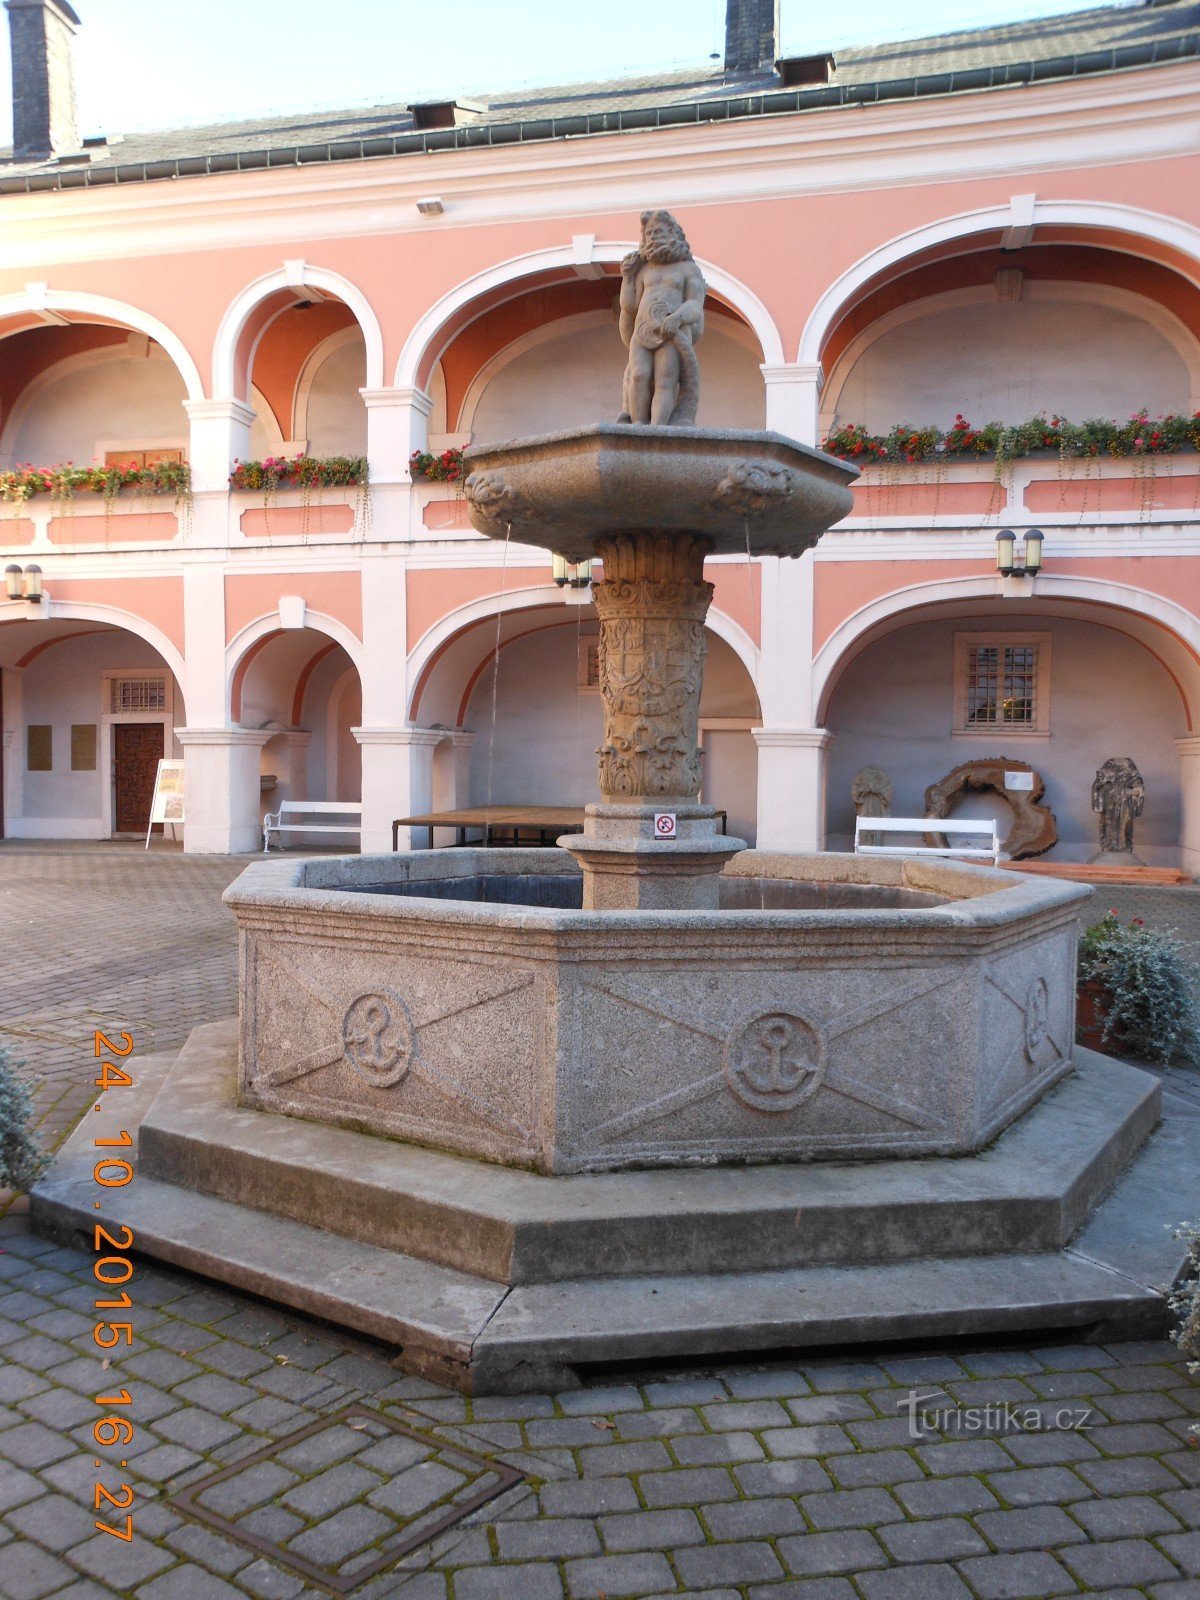 The fountain at the Sokolovsky Castle